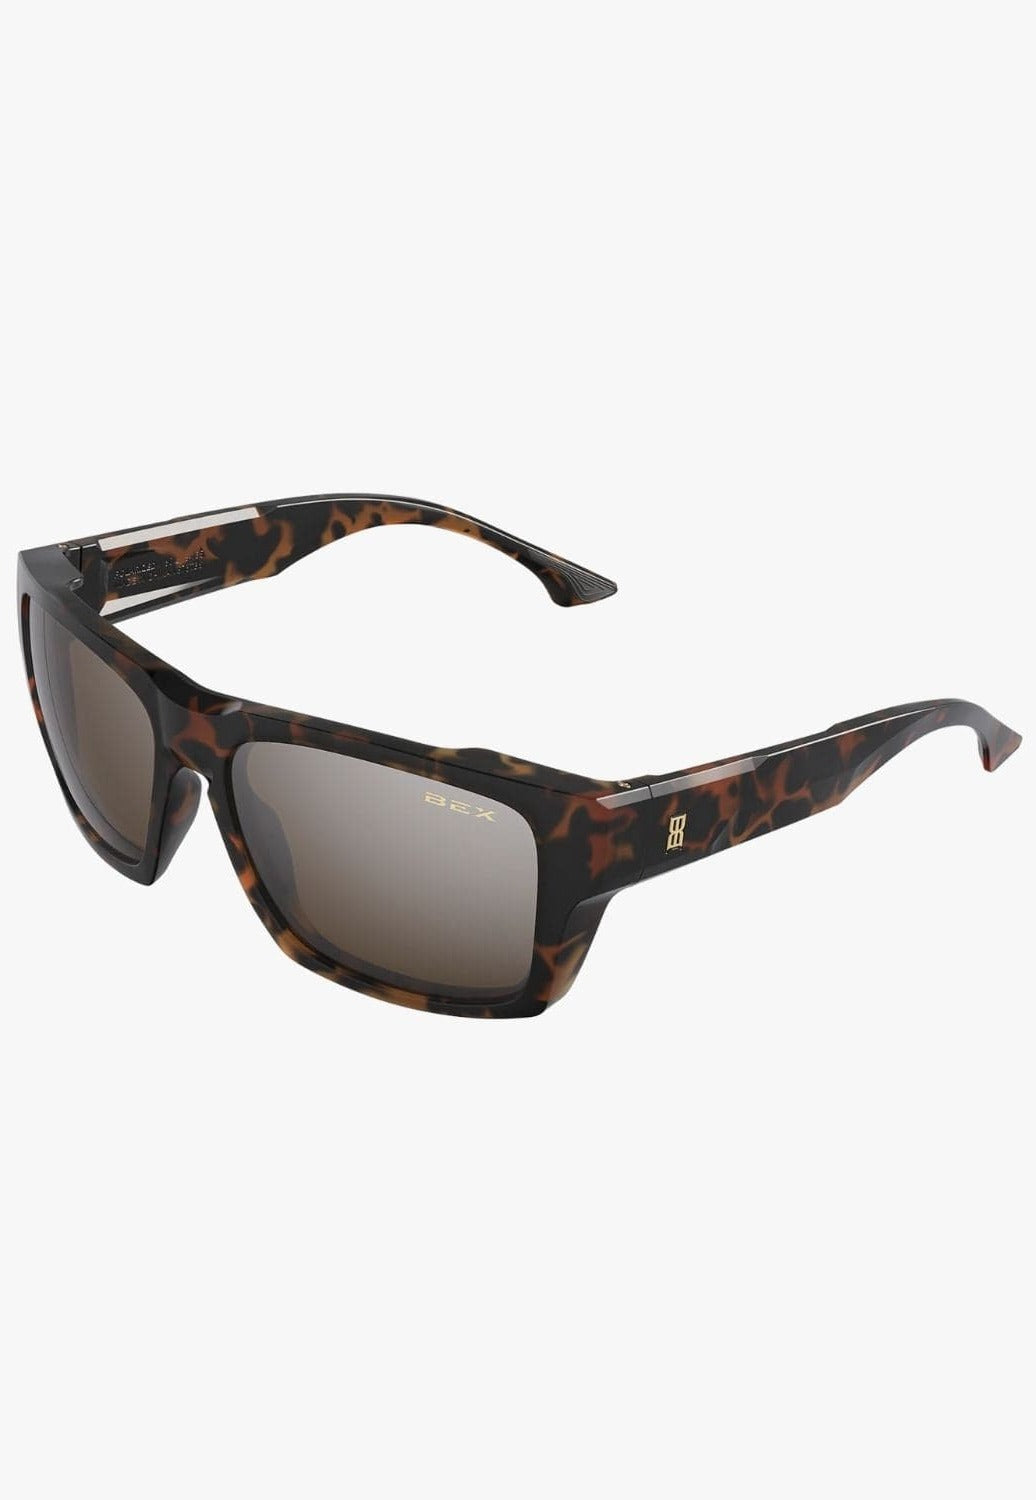 BEX ACCESSORIES-Sunglasses Tortoise/Silver Bex Patrol Sunglasses